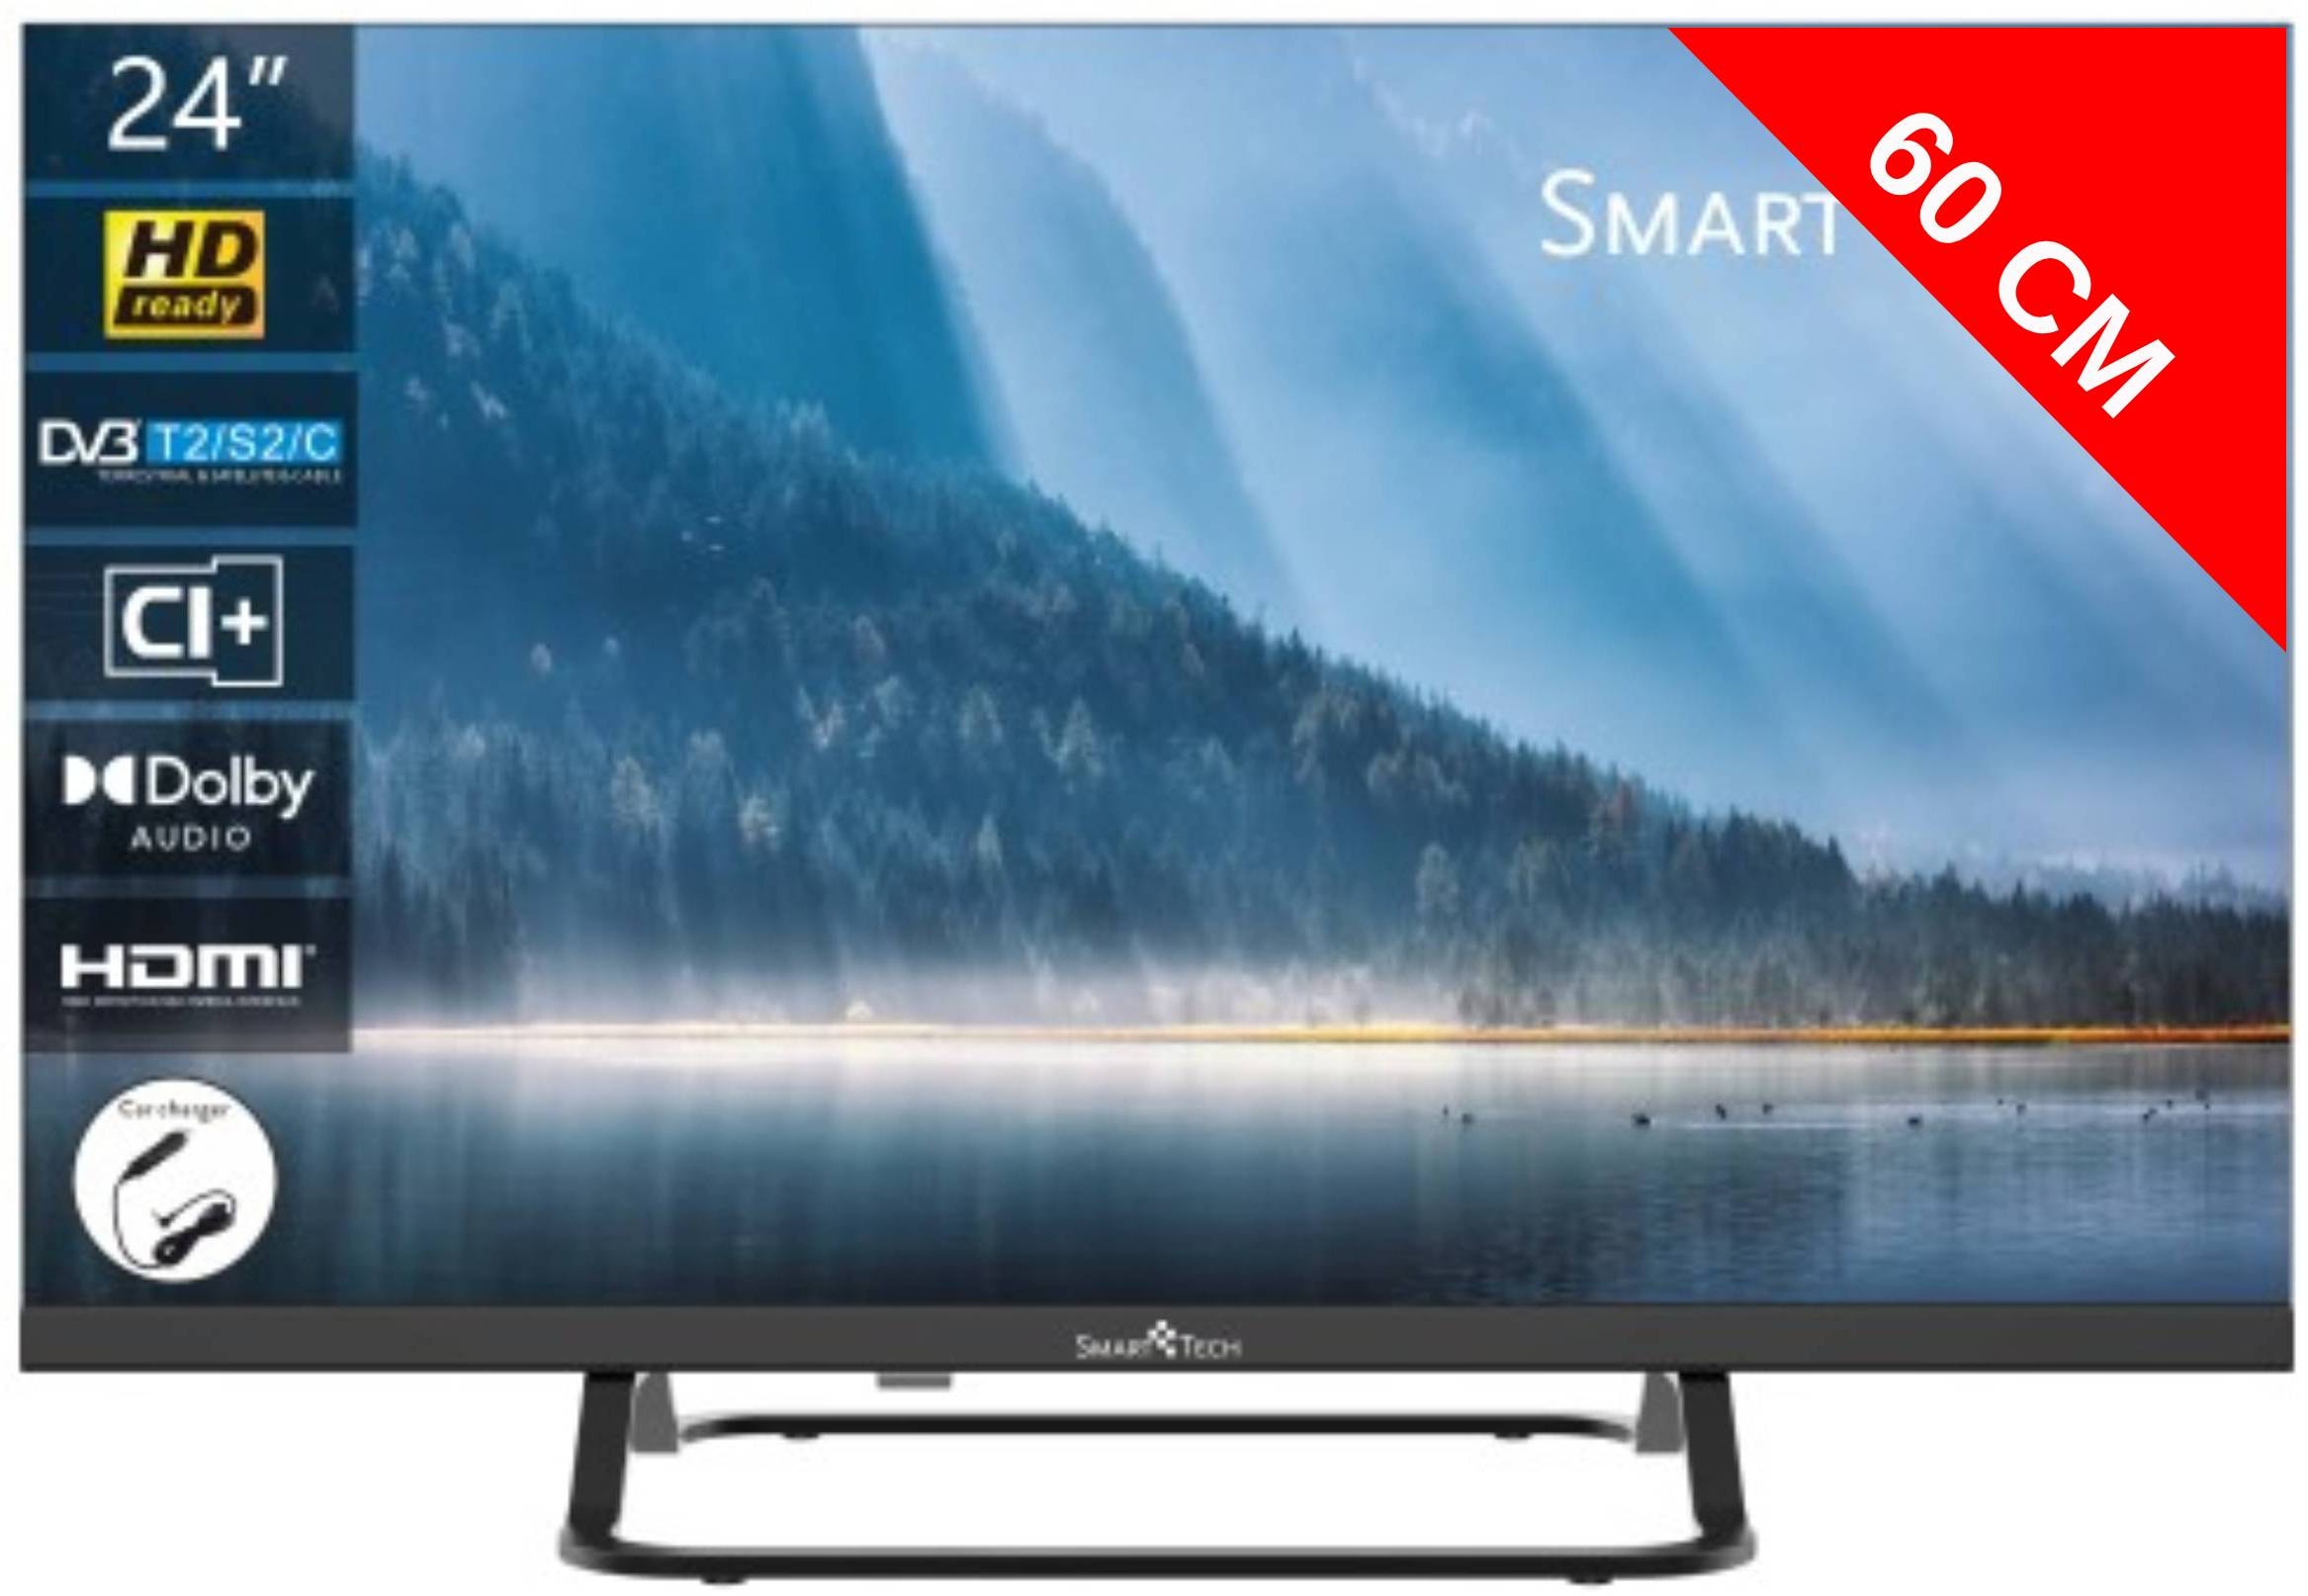 SMART TECH TV LED 60 cm HD Ready 24"  24HN01VC